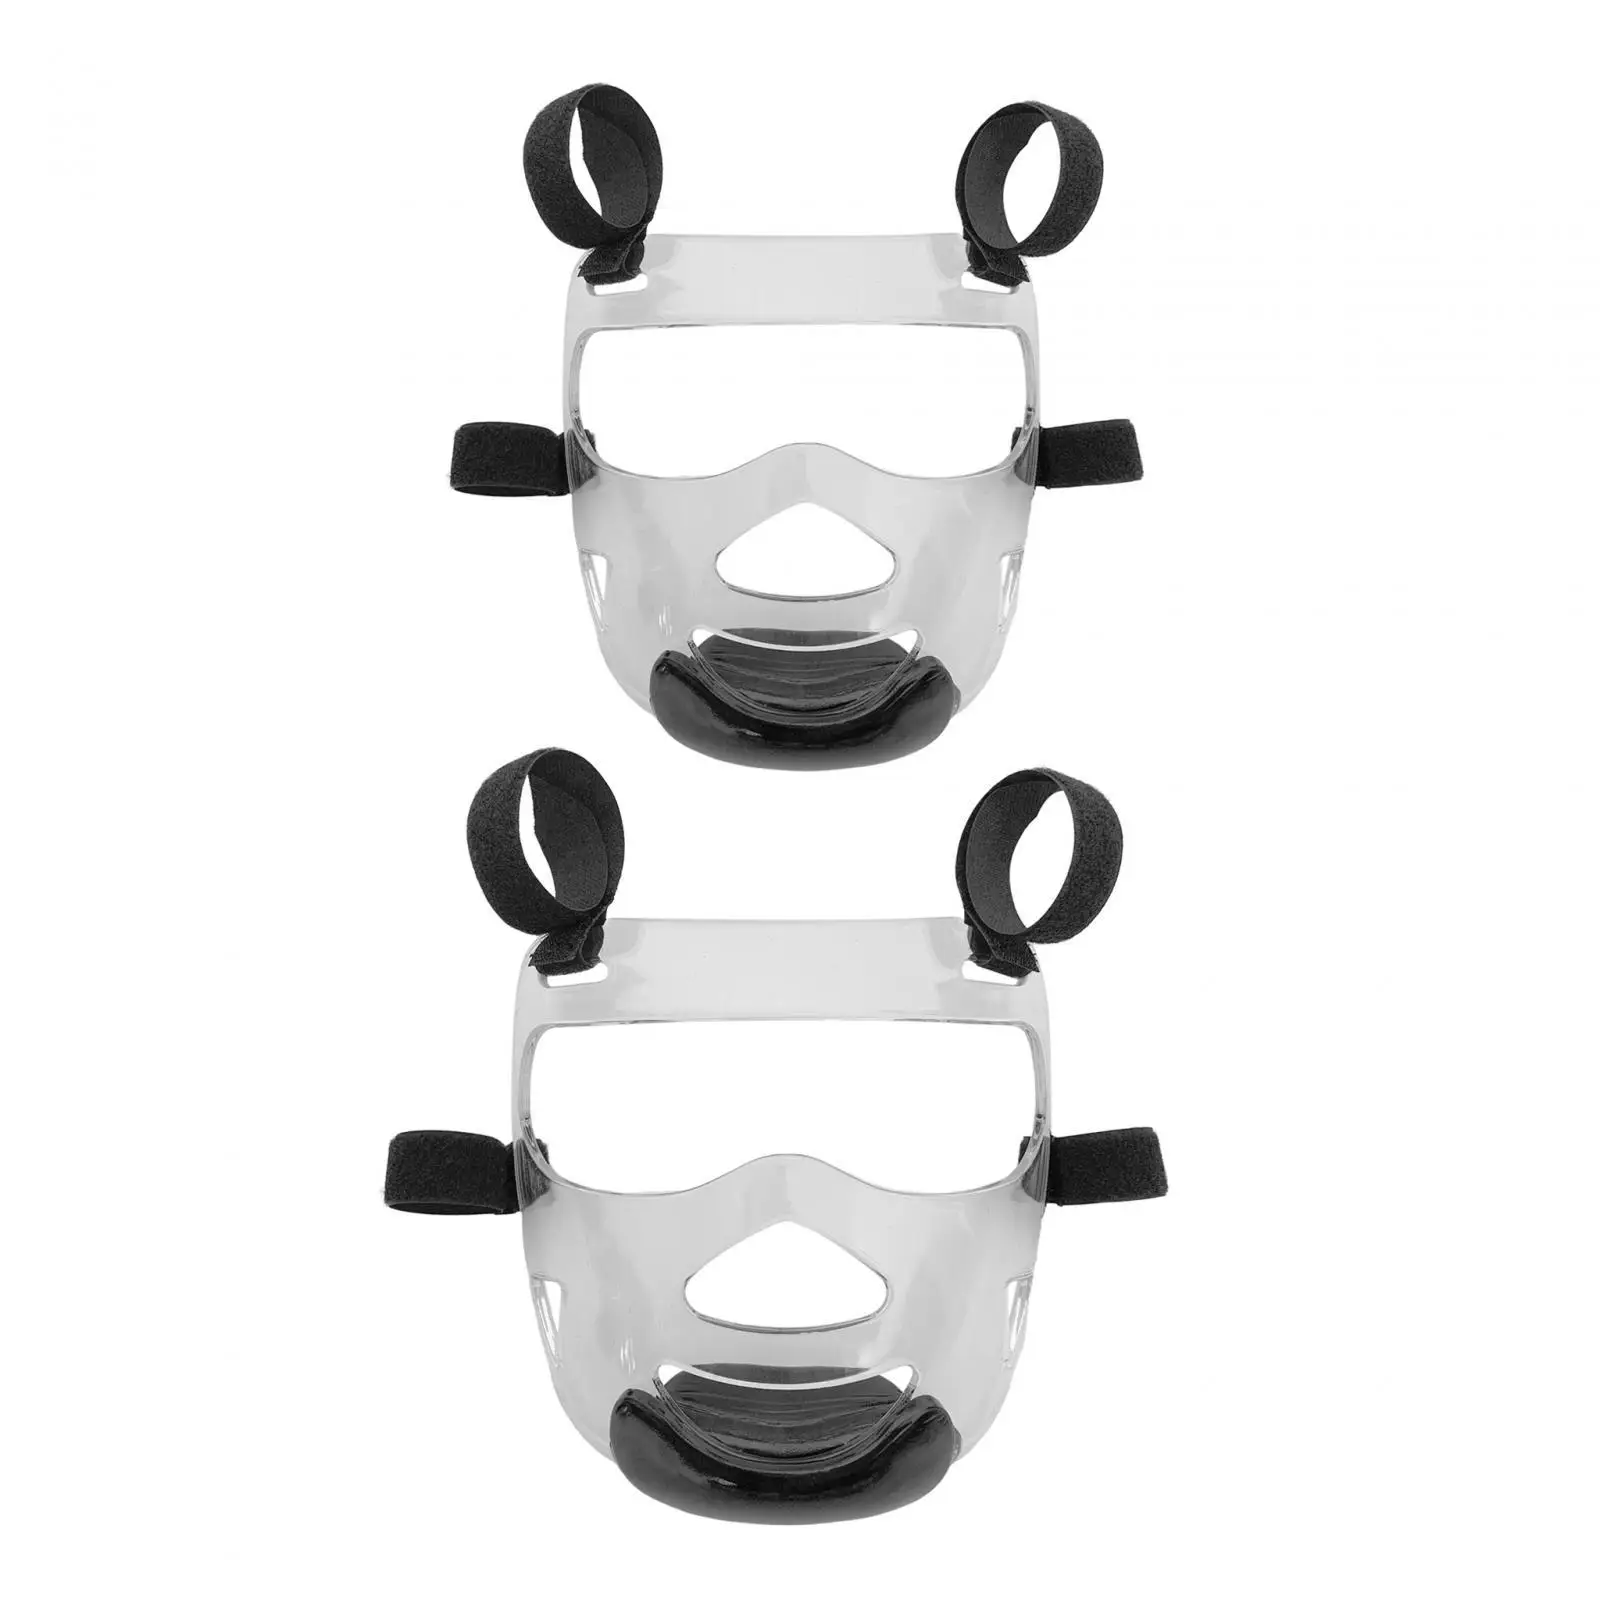 Taekwondo Mask Taekwondo Face Shield Boxing Headgear Protector Sparring Mask Transparent Face Guard for Martial Arts Sparring